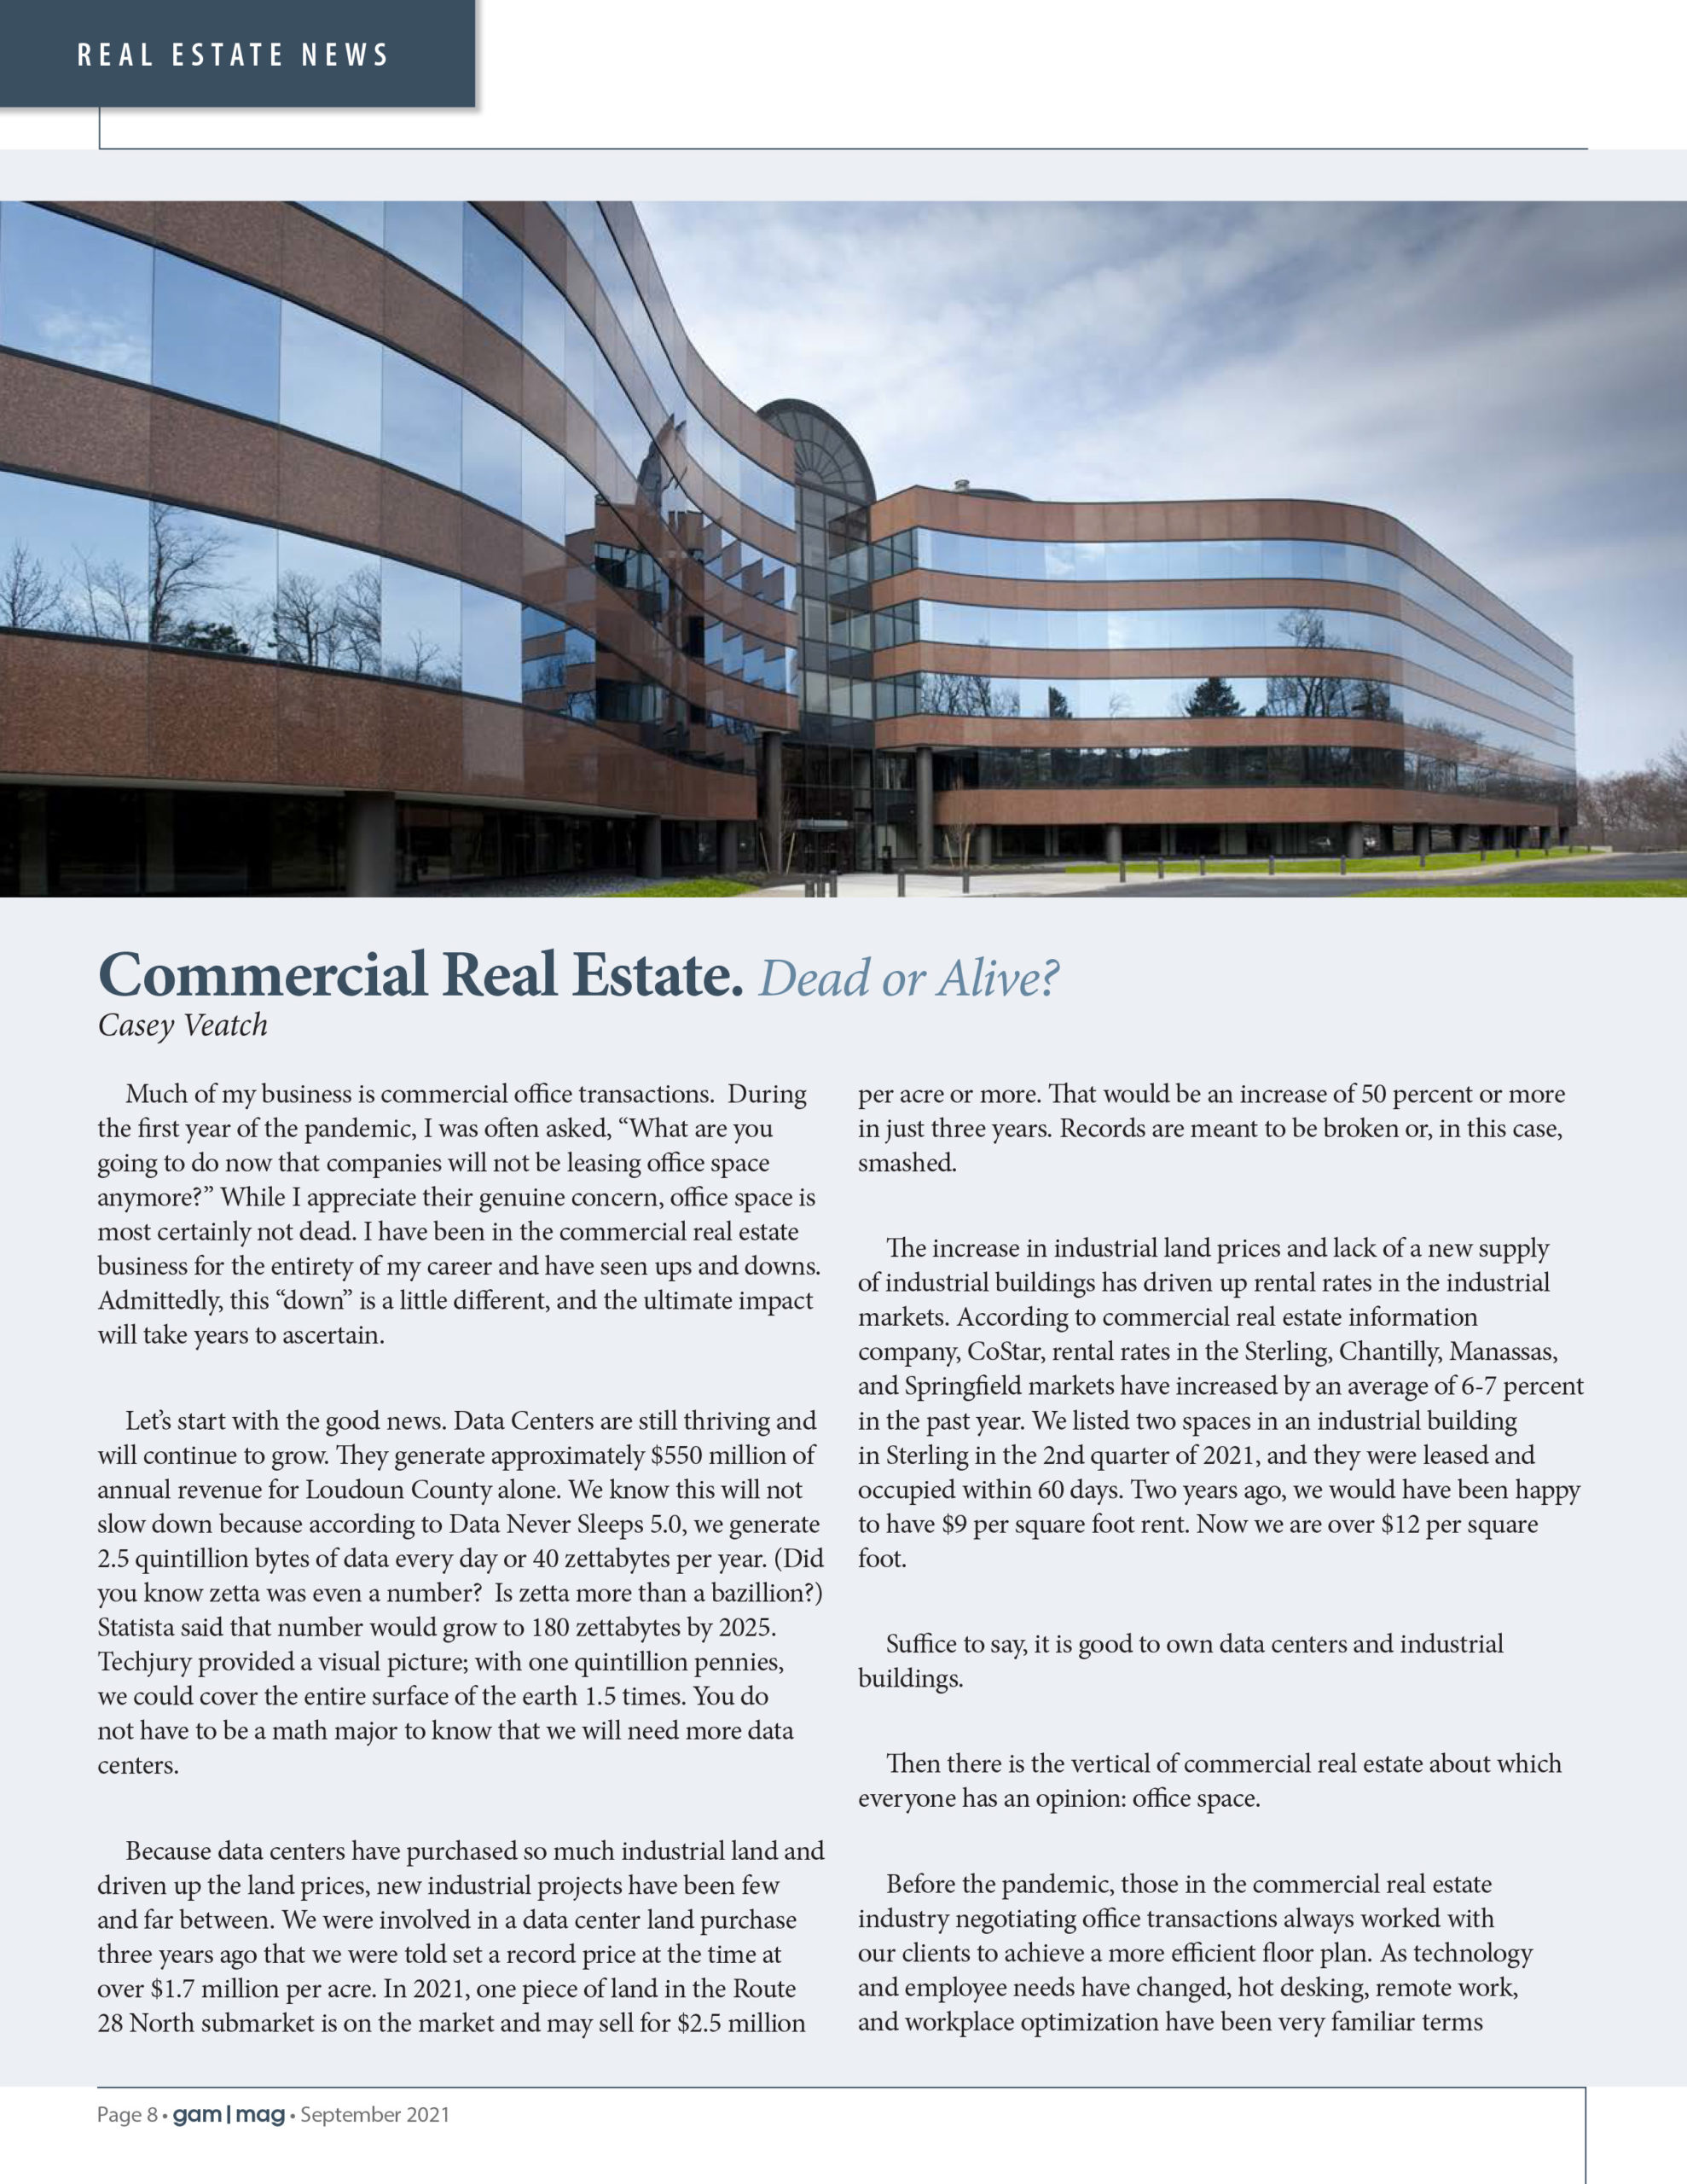 Commercial Real Estate. Dead or Alive?